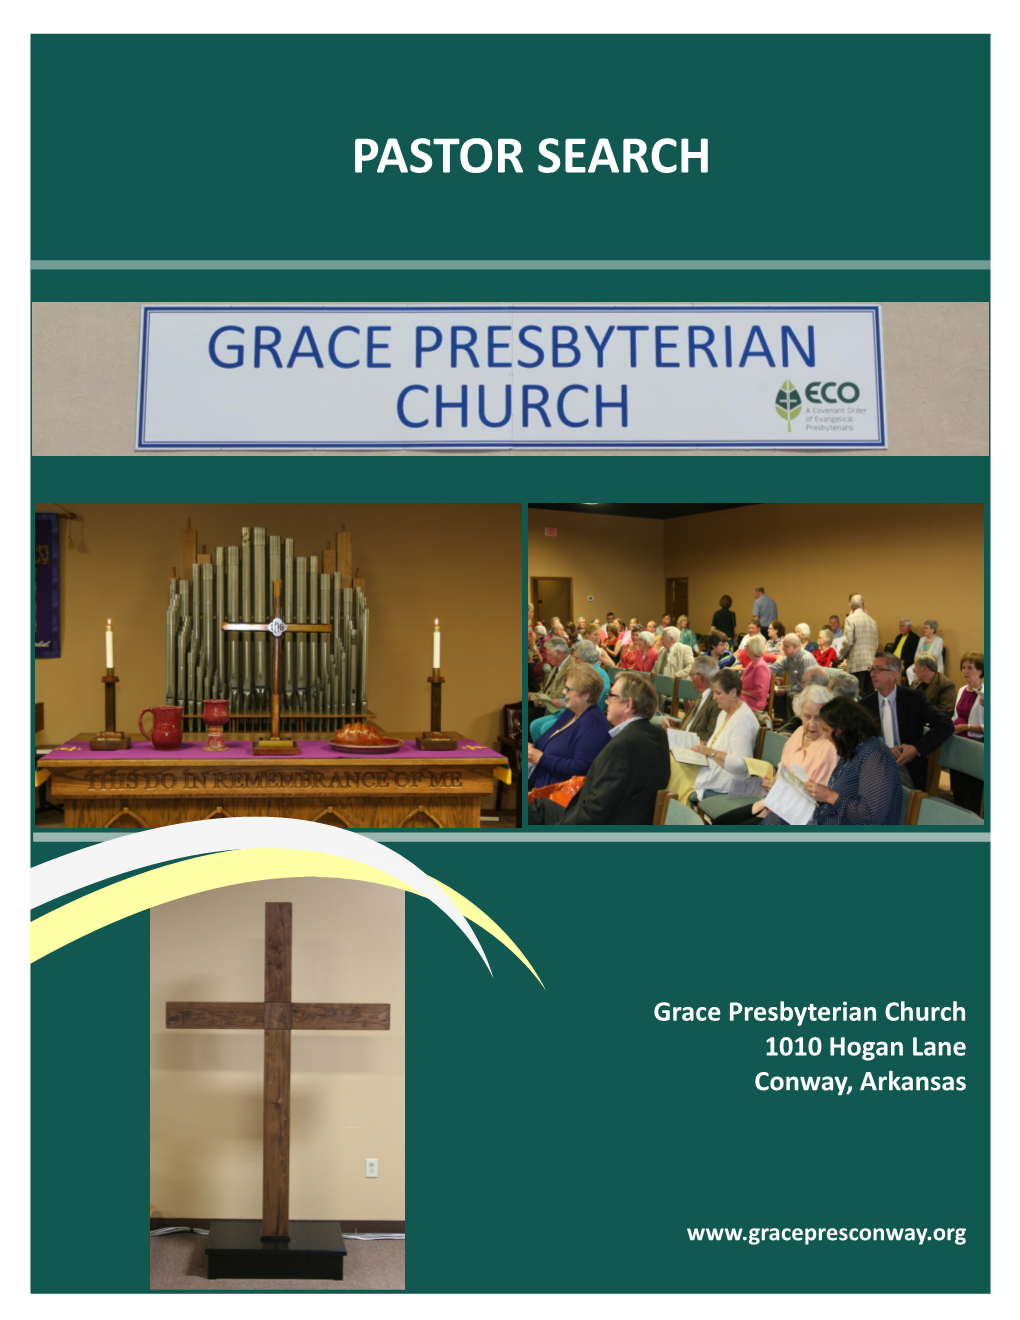 History of Grace Presbyterian Church